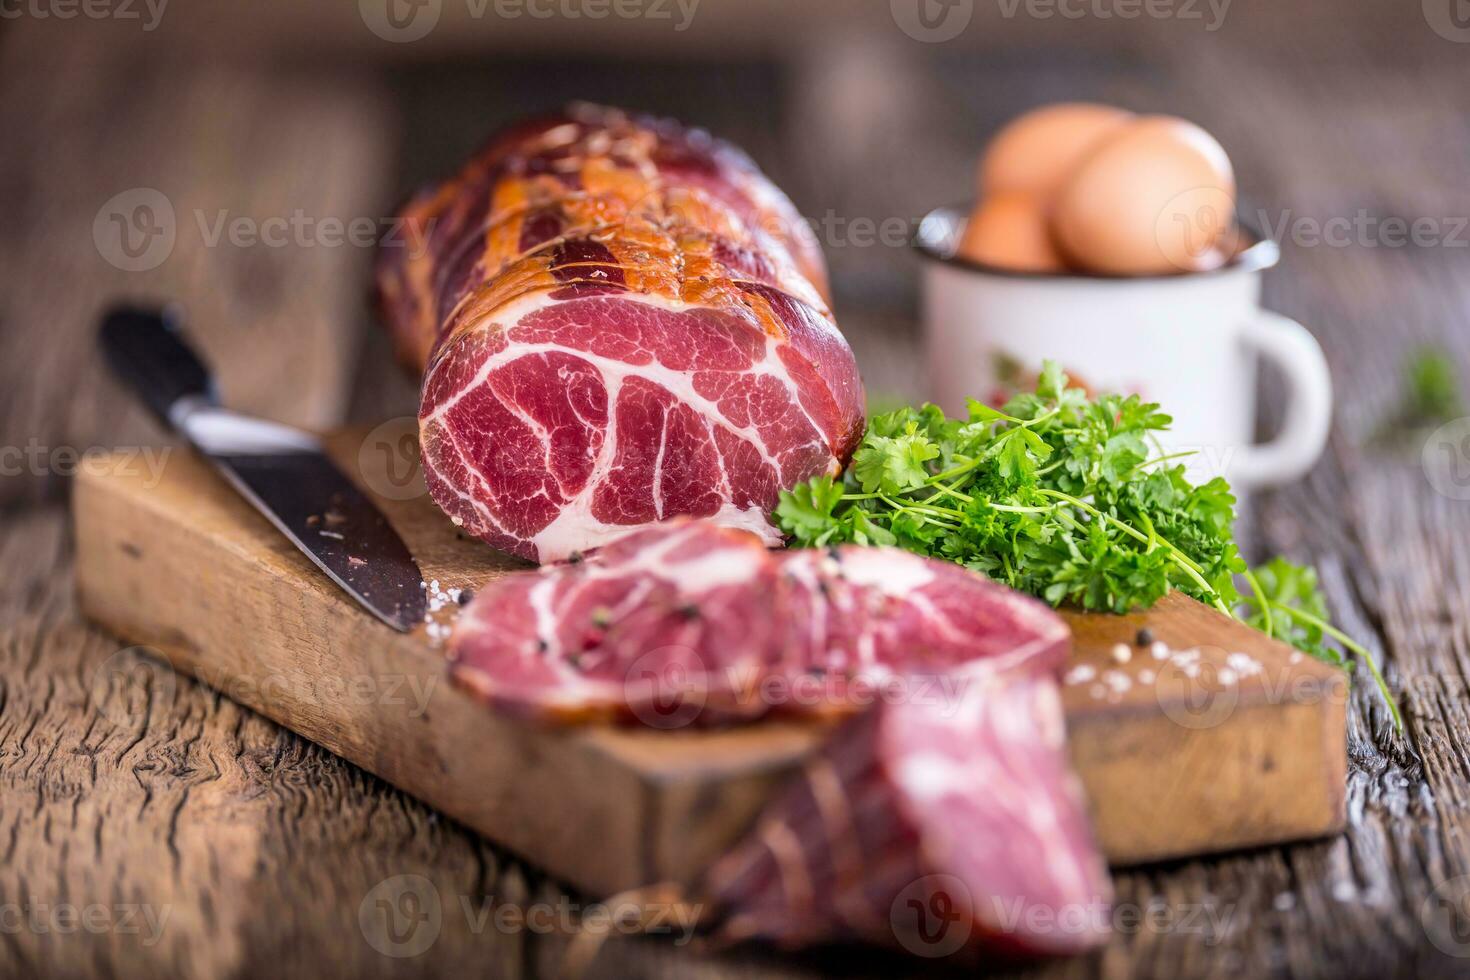 varkensvlees vlees.varkensvlees karbonade gerookt. traditioneel gerookt vlees Aan eik houten tafel in andere standen foto